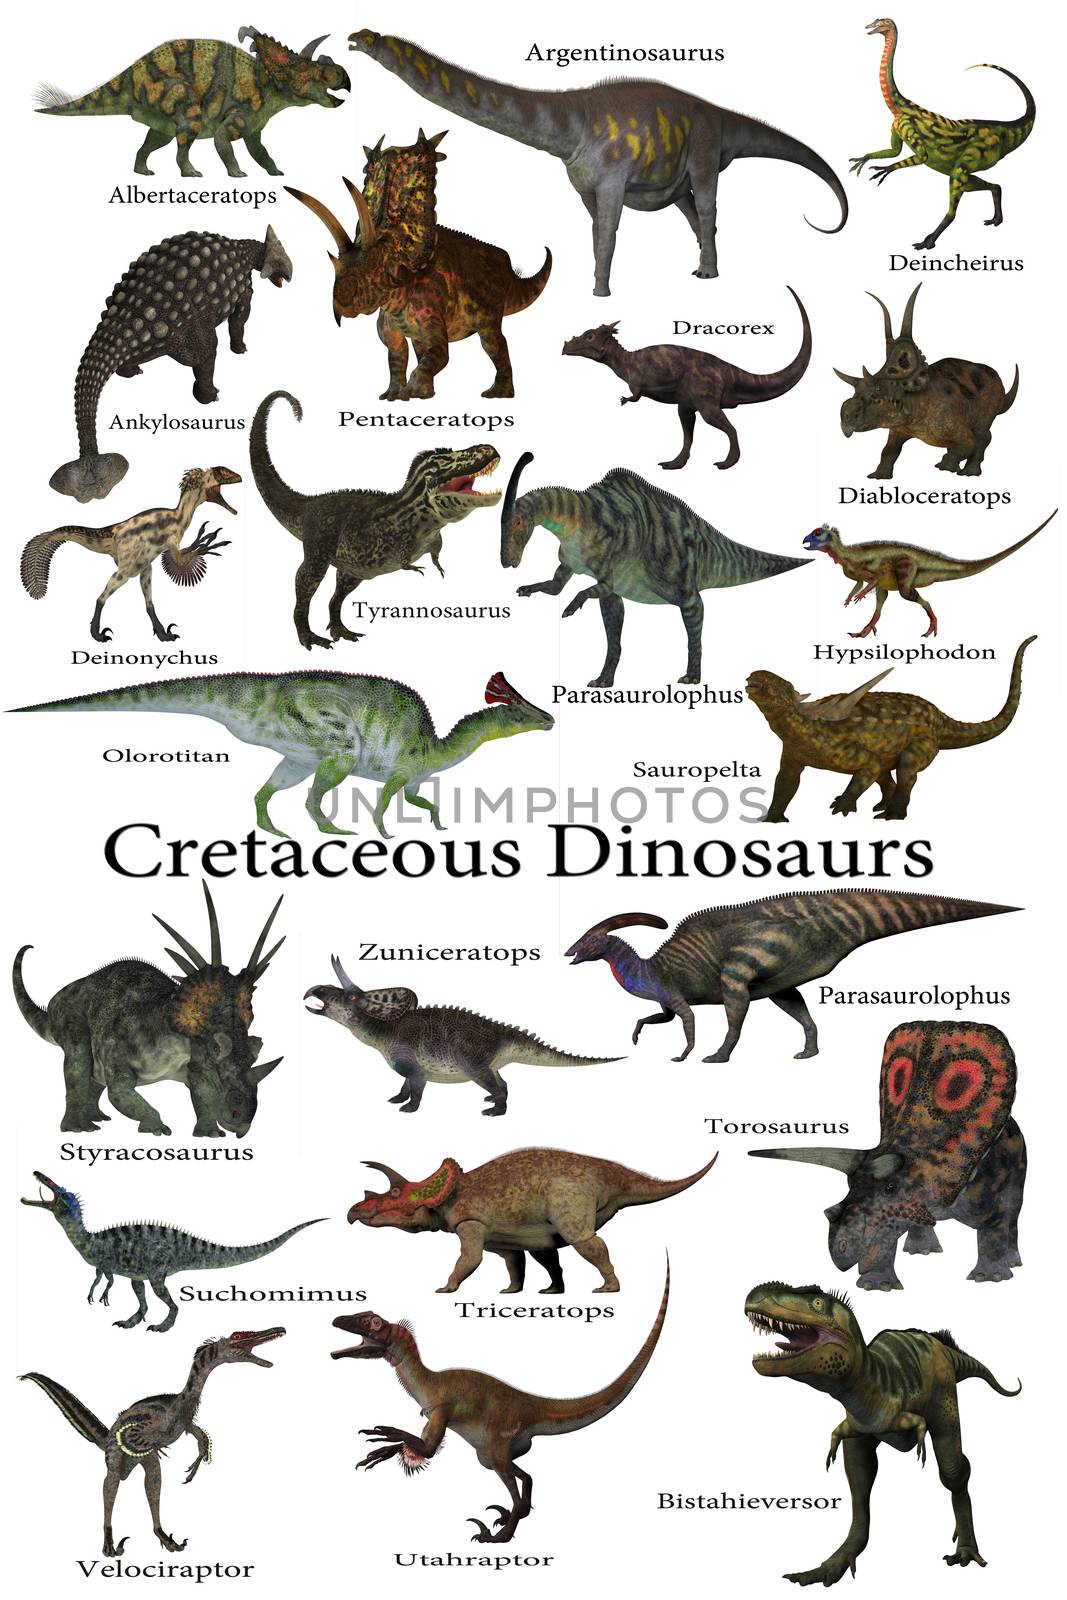 Cretaceous Dinosaurs by Catmando